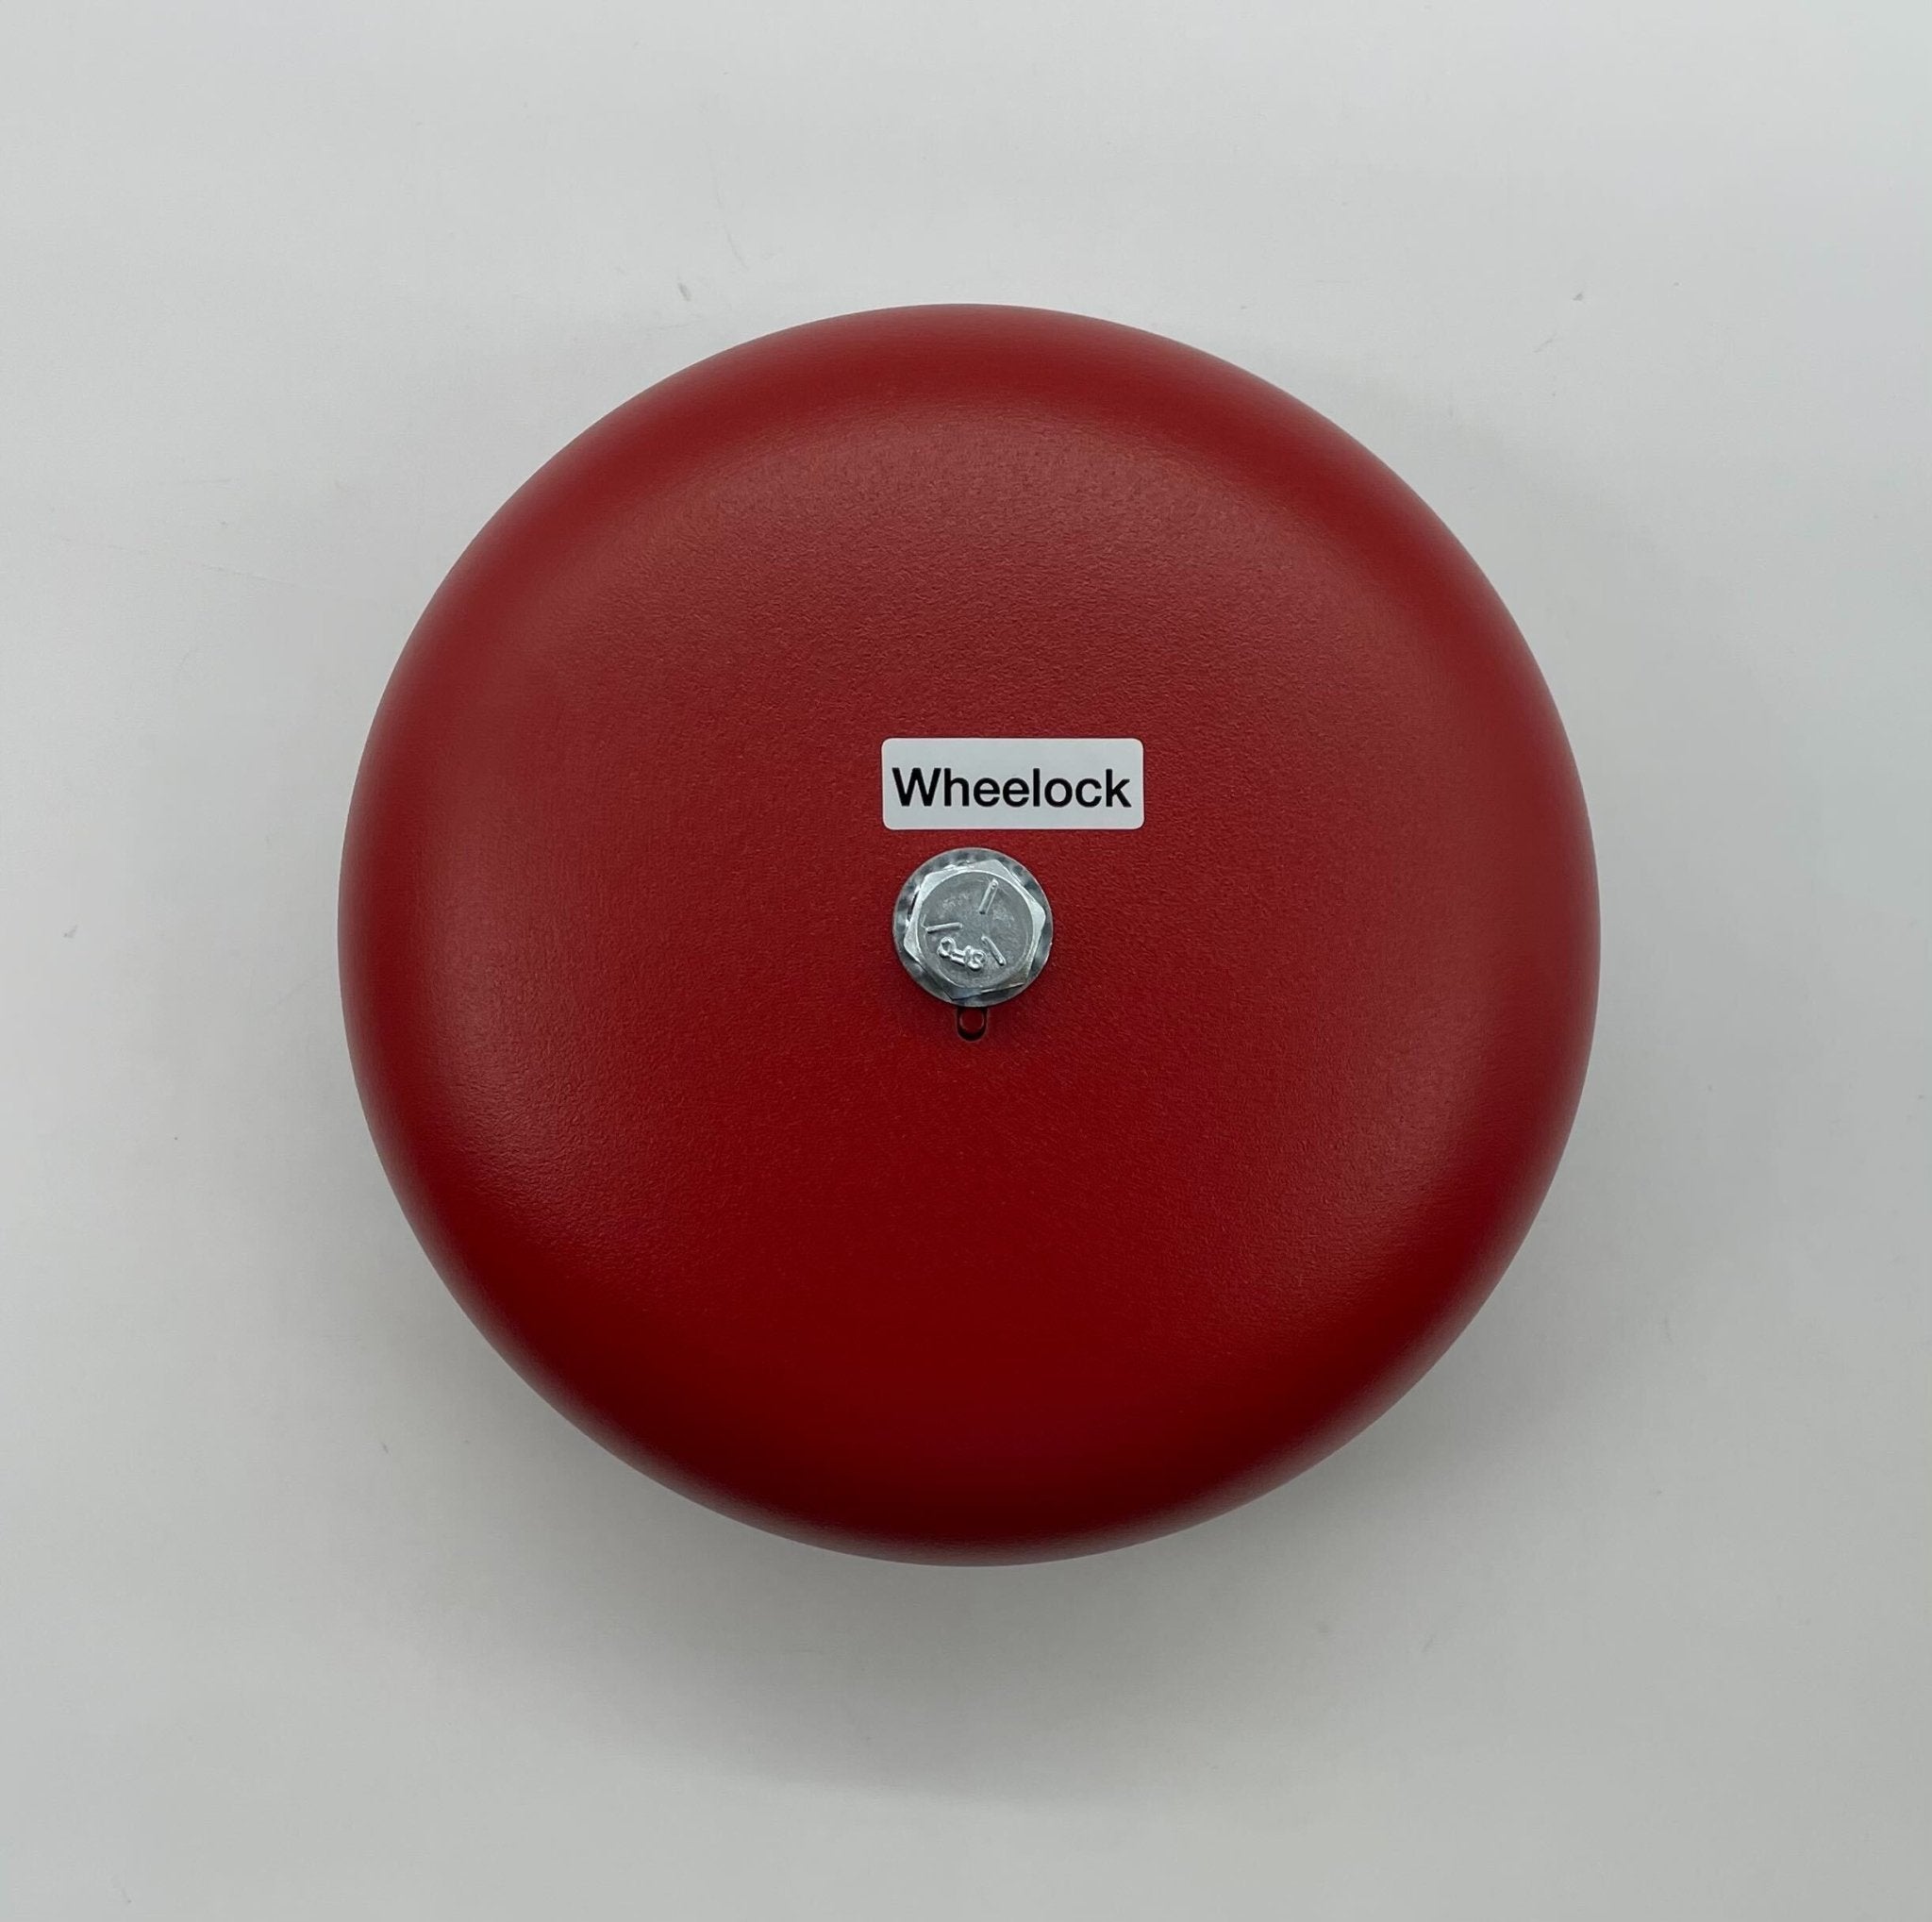 Wheelock 43T-G6-115-R - The Fire Alarm Supplier